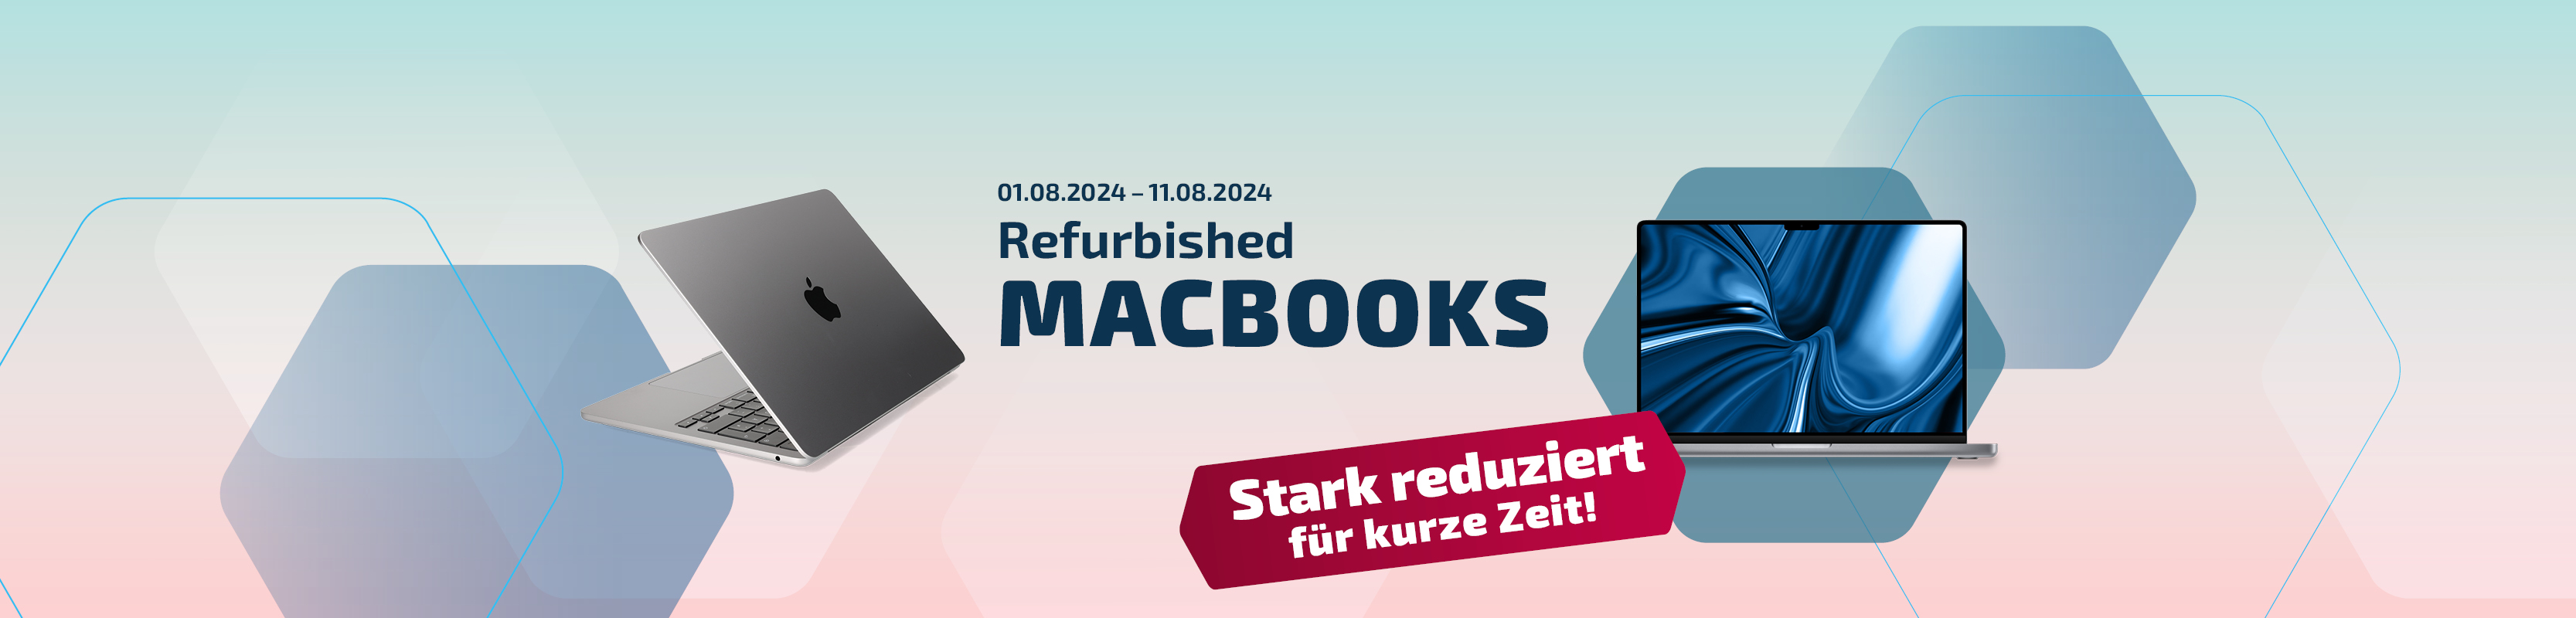 Gebrauchte&#x20;MacBooks&#x3A;MacBook&#x20;refurbished&#x20;g&#x00FC;nstiger